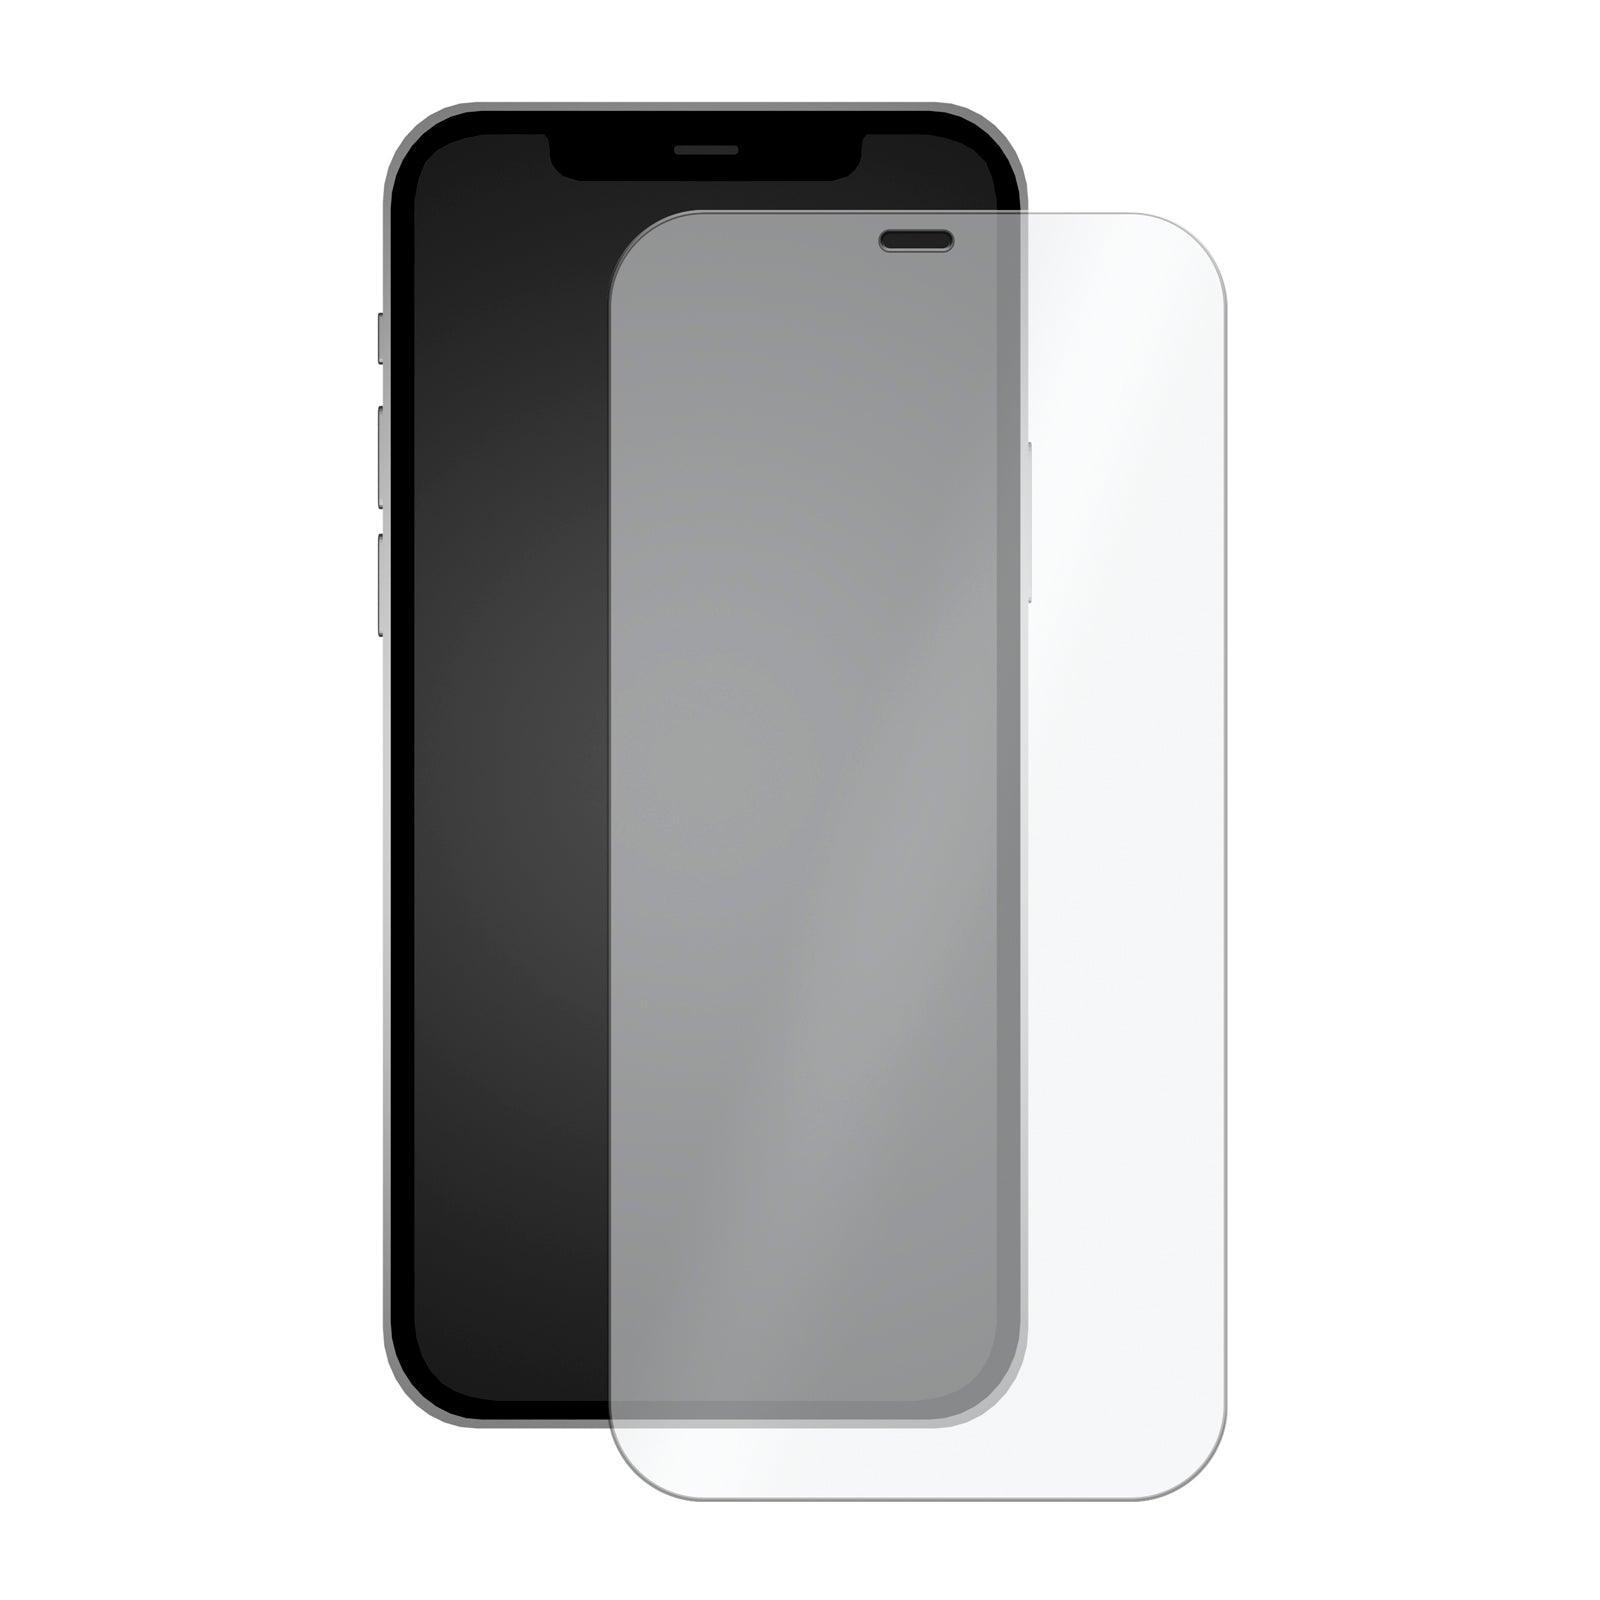 Kosmos Shield beskyttelsesglas | iPhone 5,5s,5c,5SE - Kosmos Renew